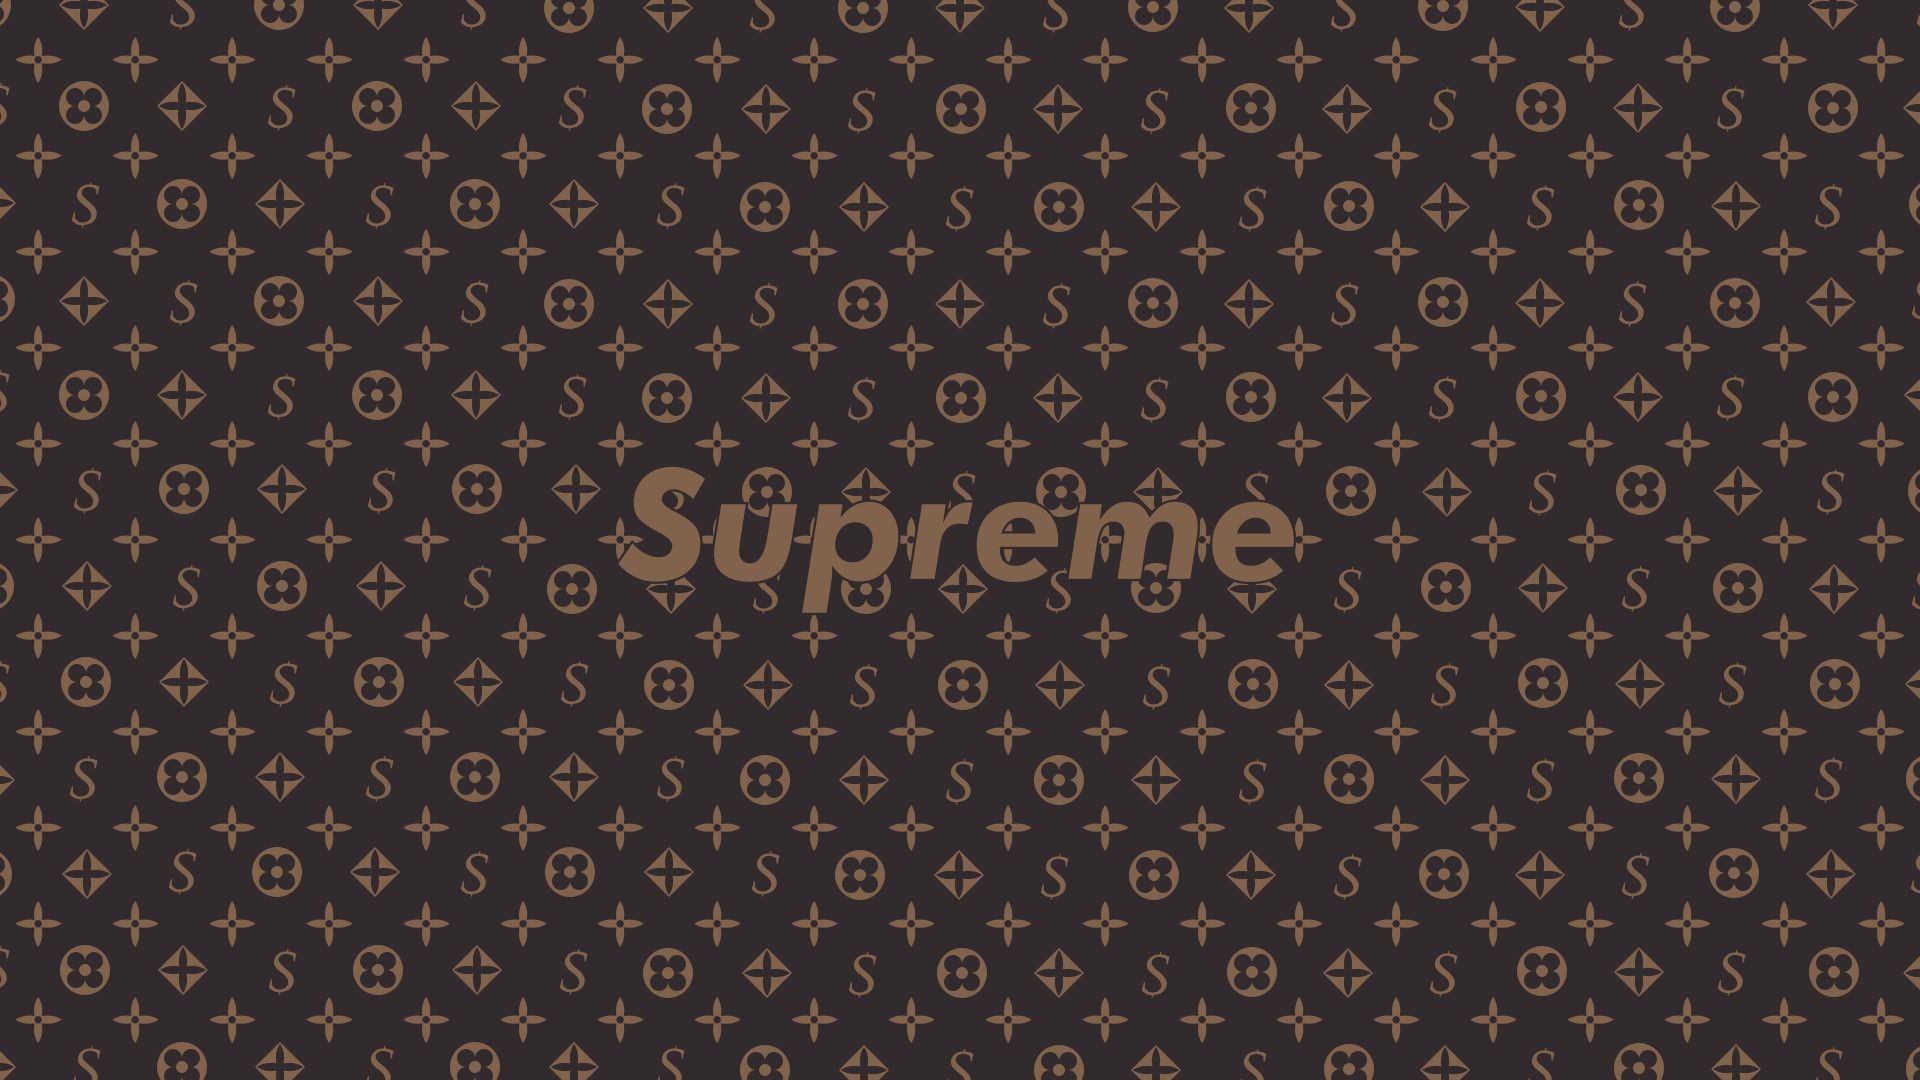 Some Supreme X Lv Wallpaper I Made Hypebeast